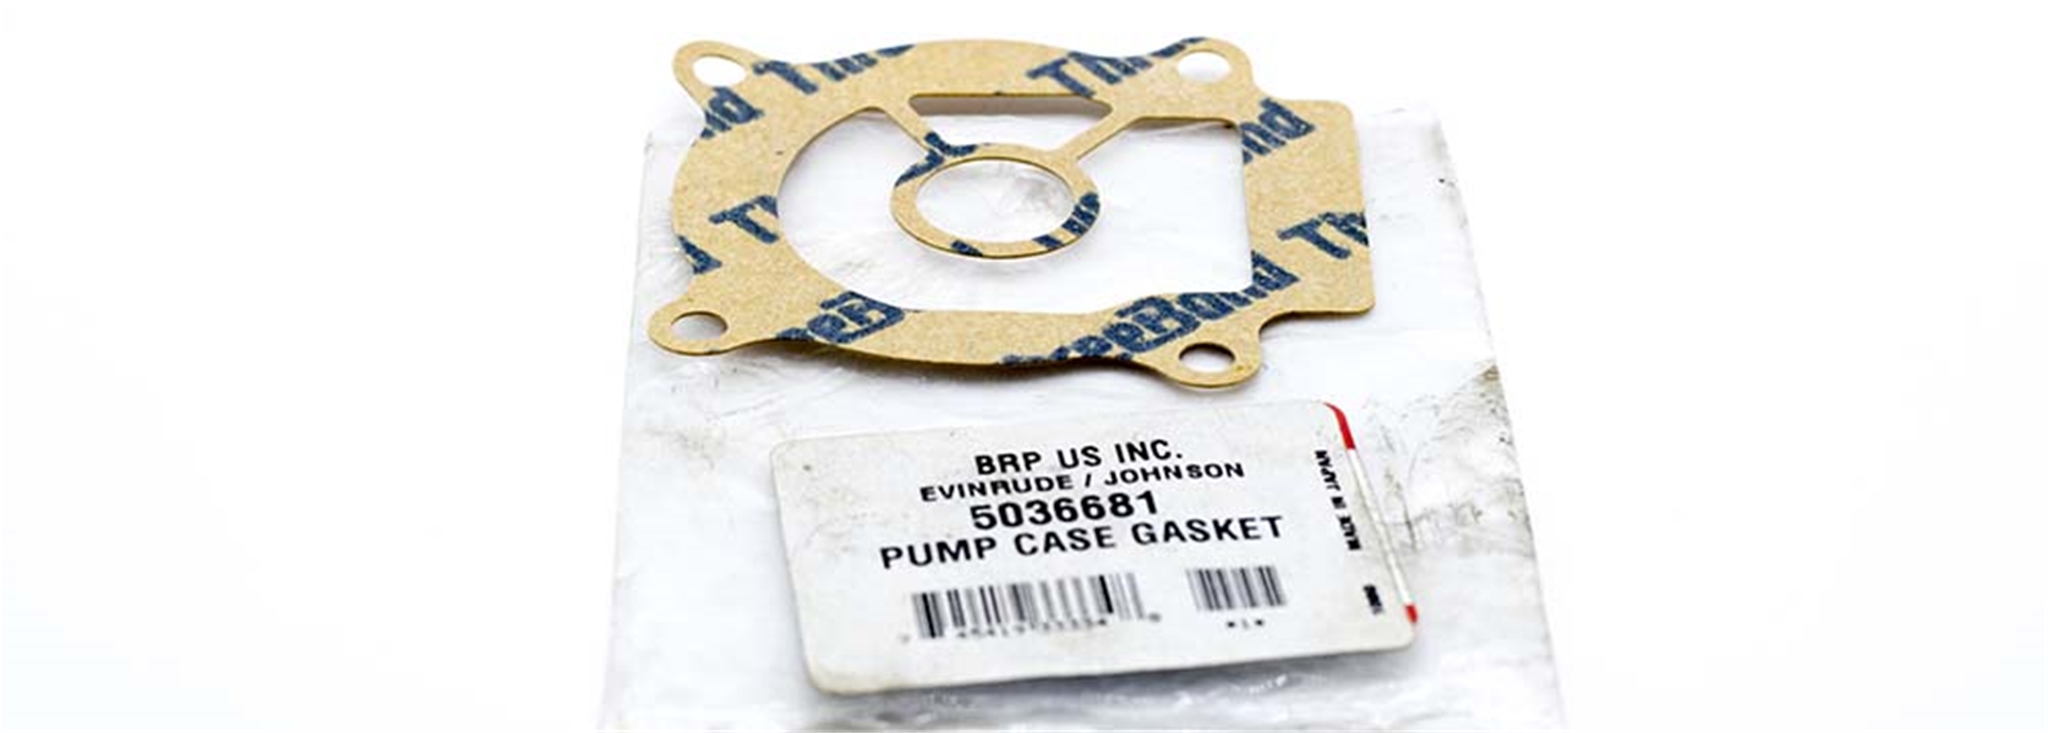 5036681 Evinrude Johnson Pump Case Gasket